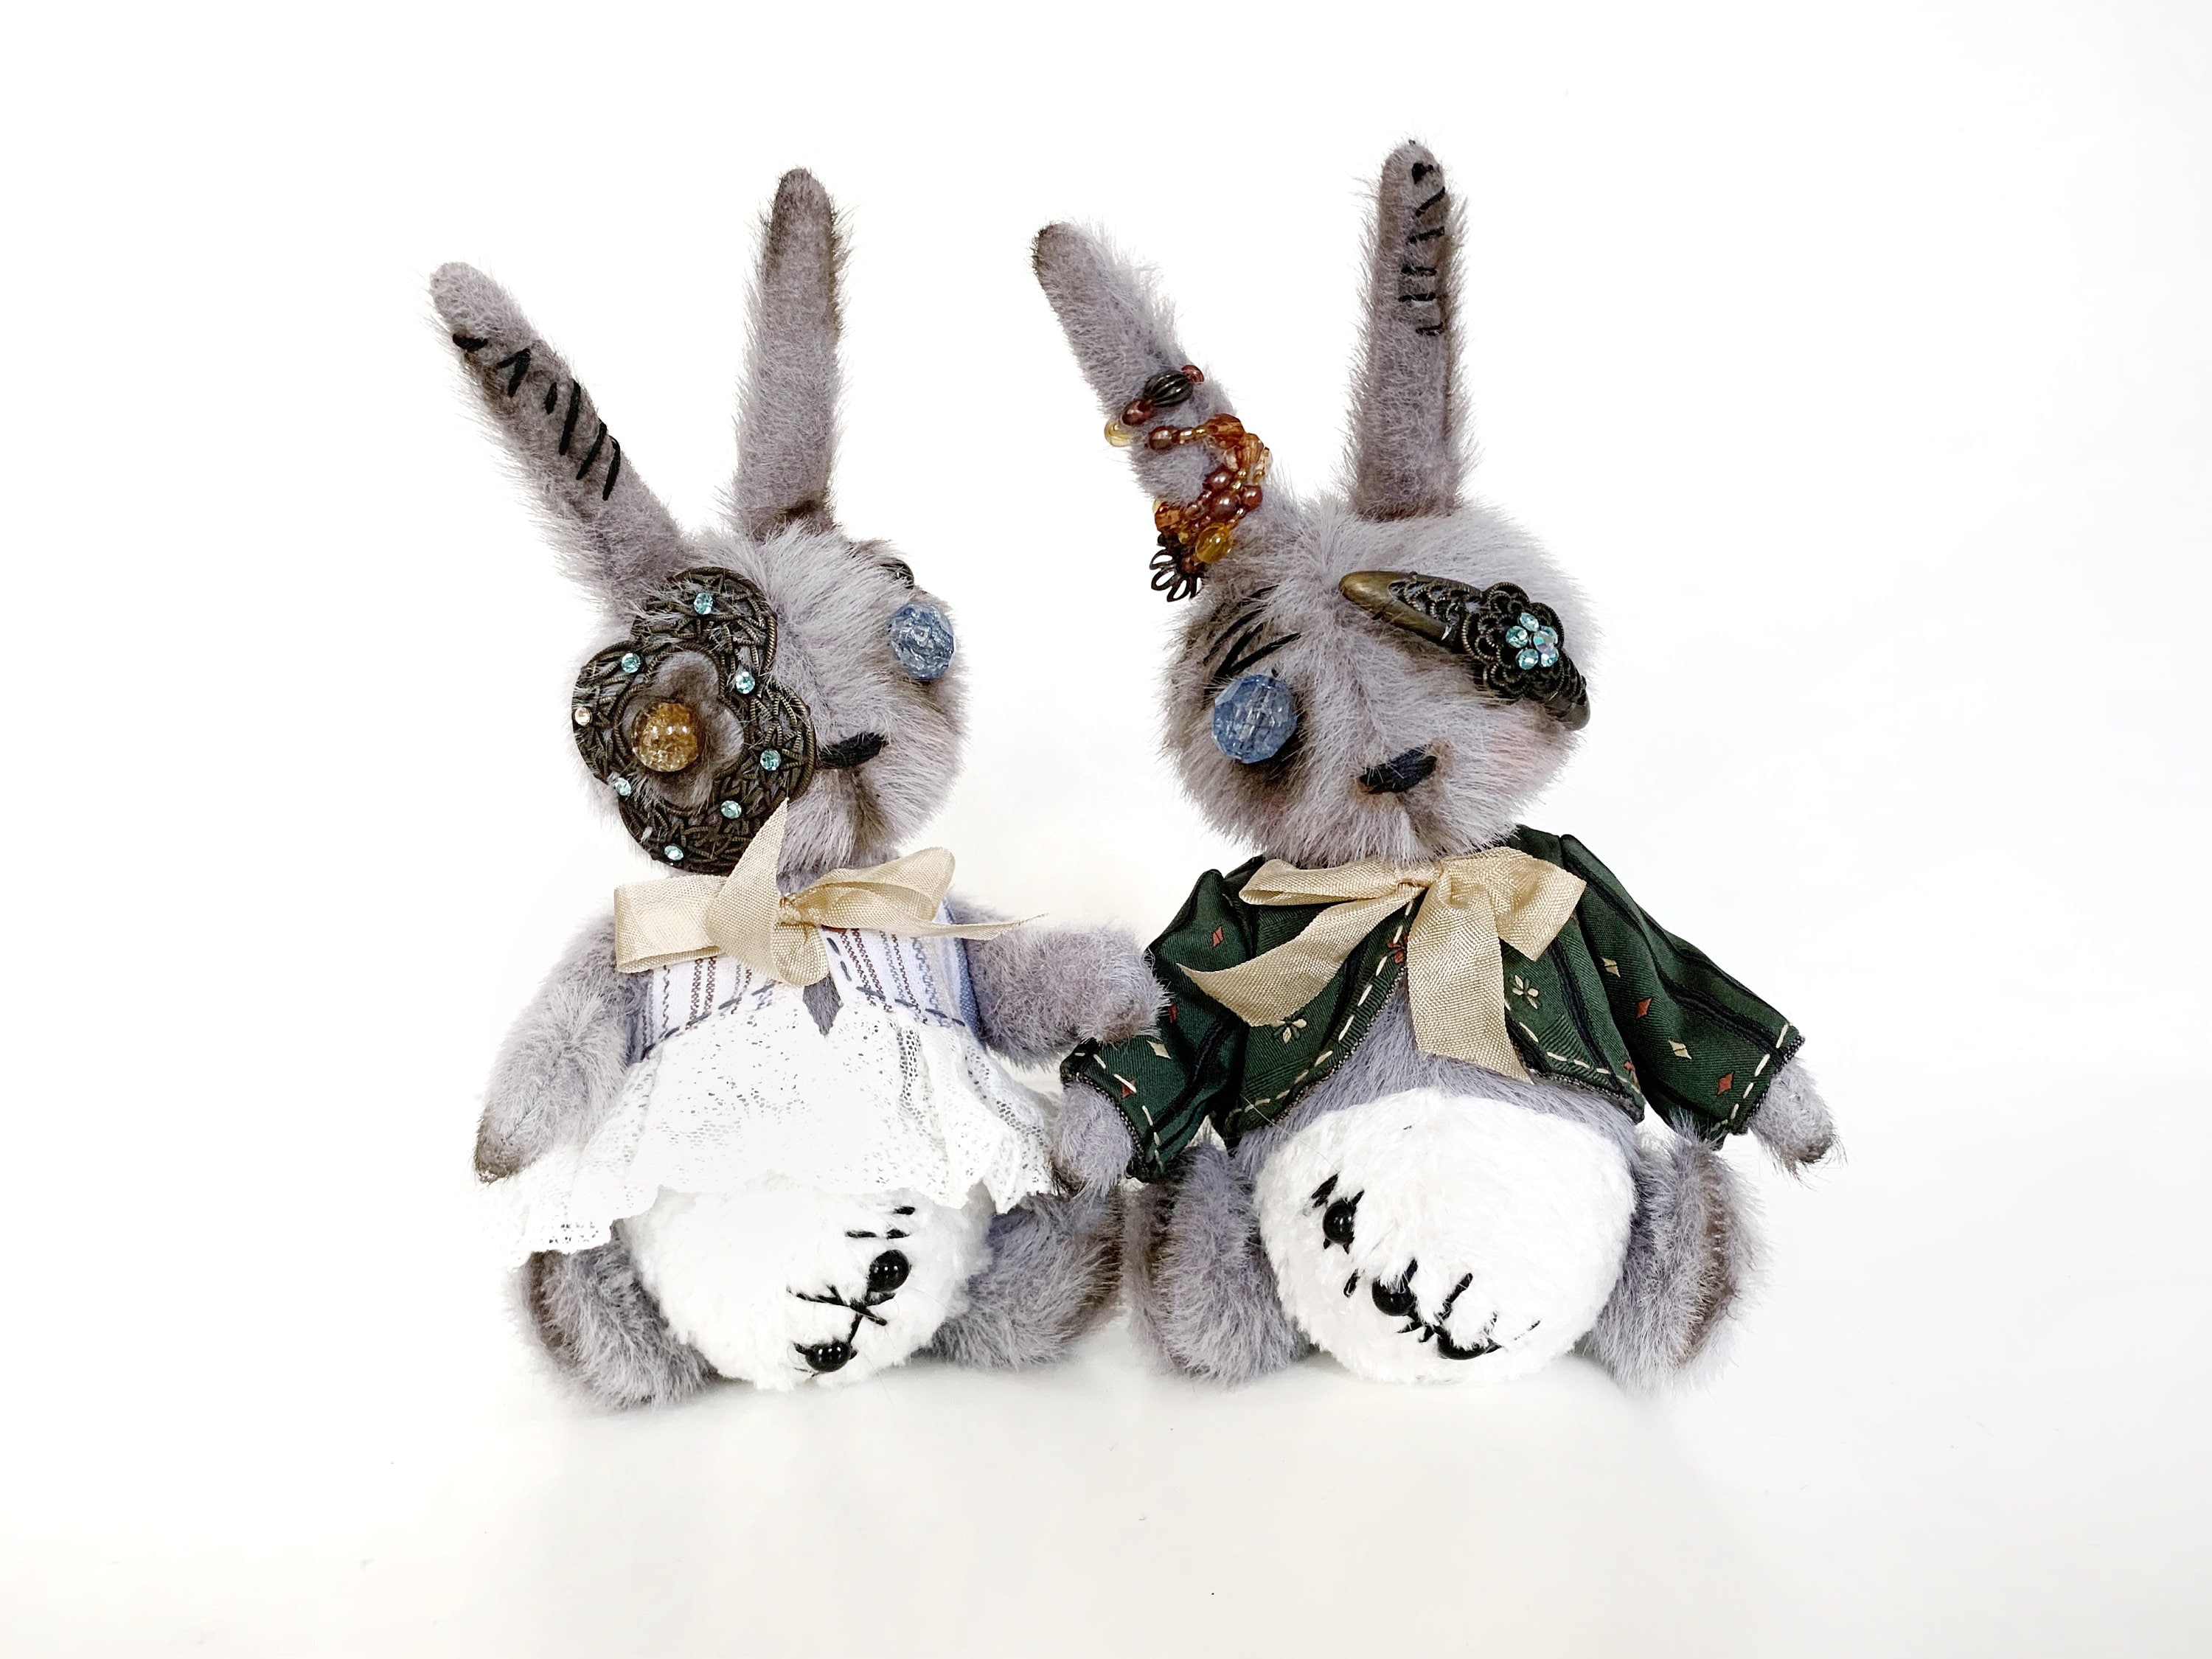 Handmade Art Doll, Creepy Cute Bunny Stuffed Animal, Goth de